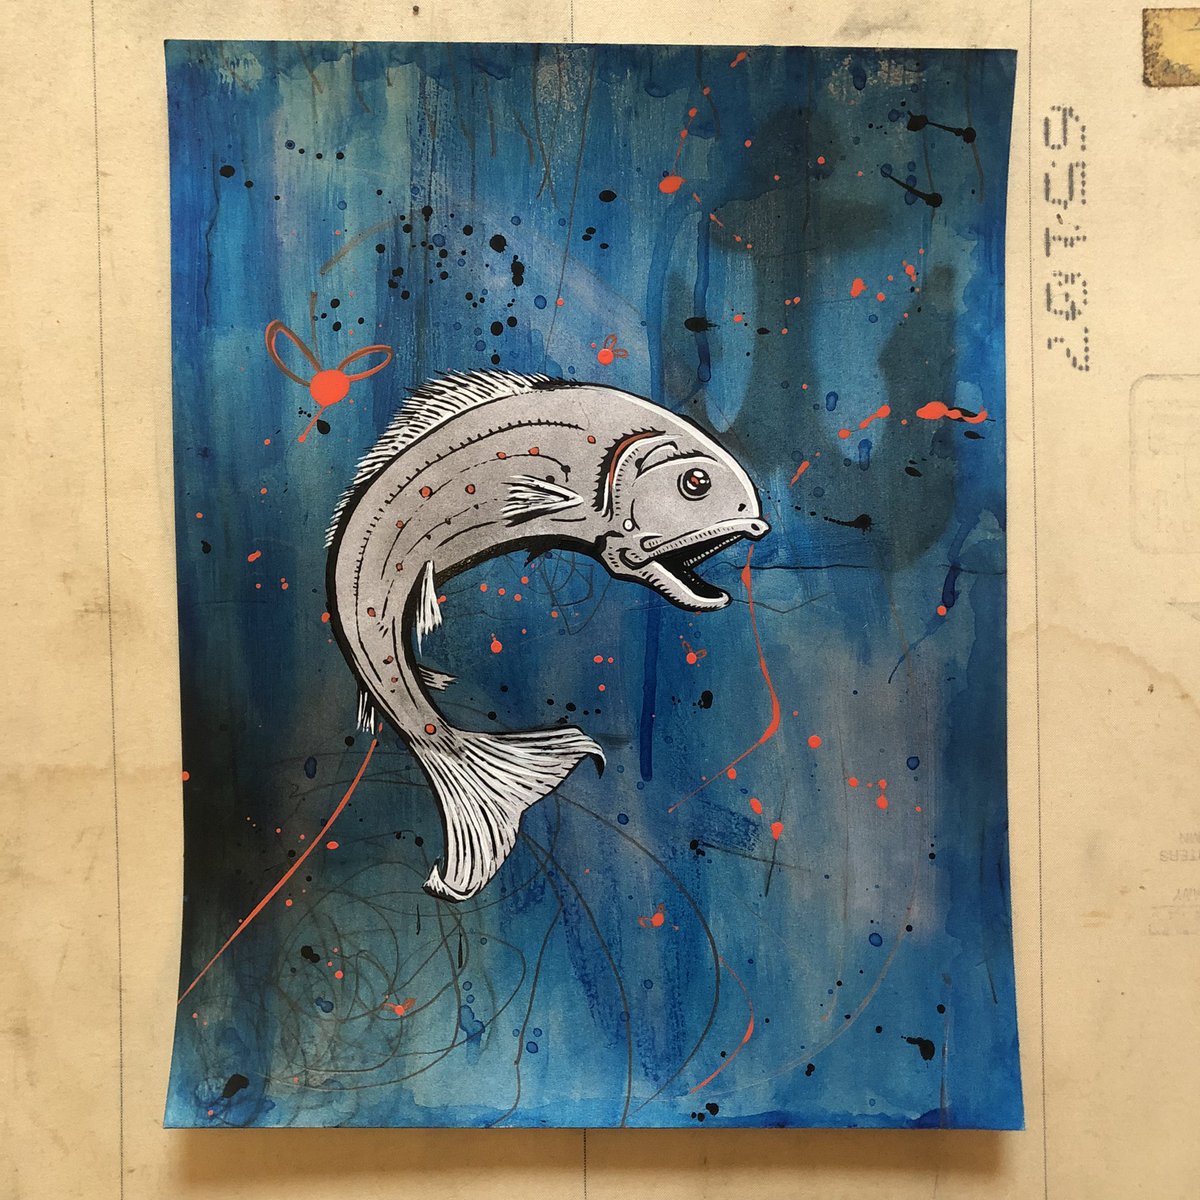 Fly pelican fly - acrylic on paper to be framed - 2022 - Available - #fish #bass #trout #lure #graffiti #art #Streetart #stlouis #newcontemporary #painting #kunstwerk #juxtapoz #operadarte #artecontemporáneo #prints #stl #modernart #Justintolentino #artforsale #contemporaryart